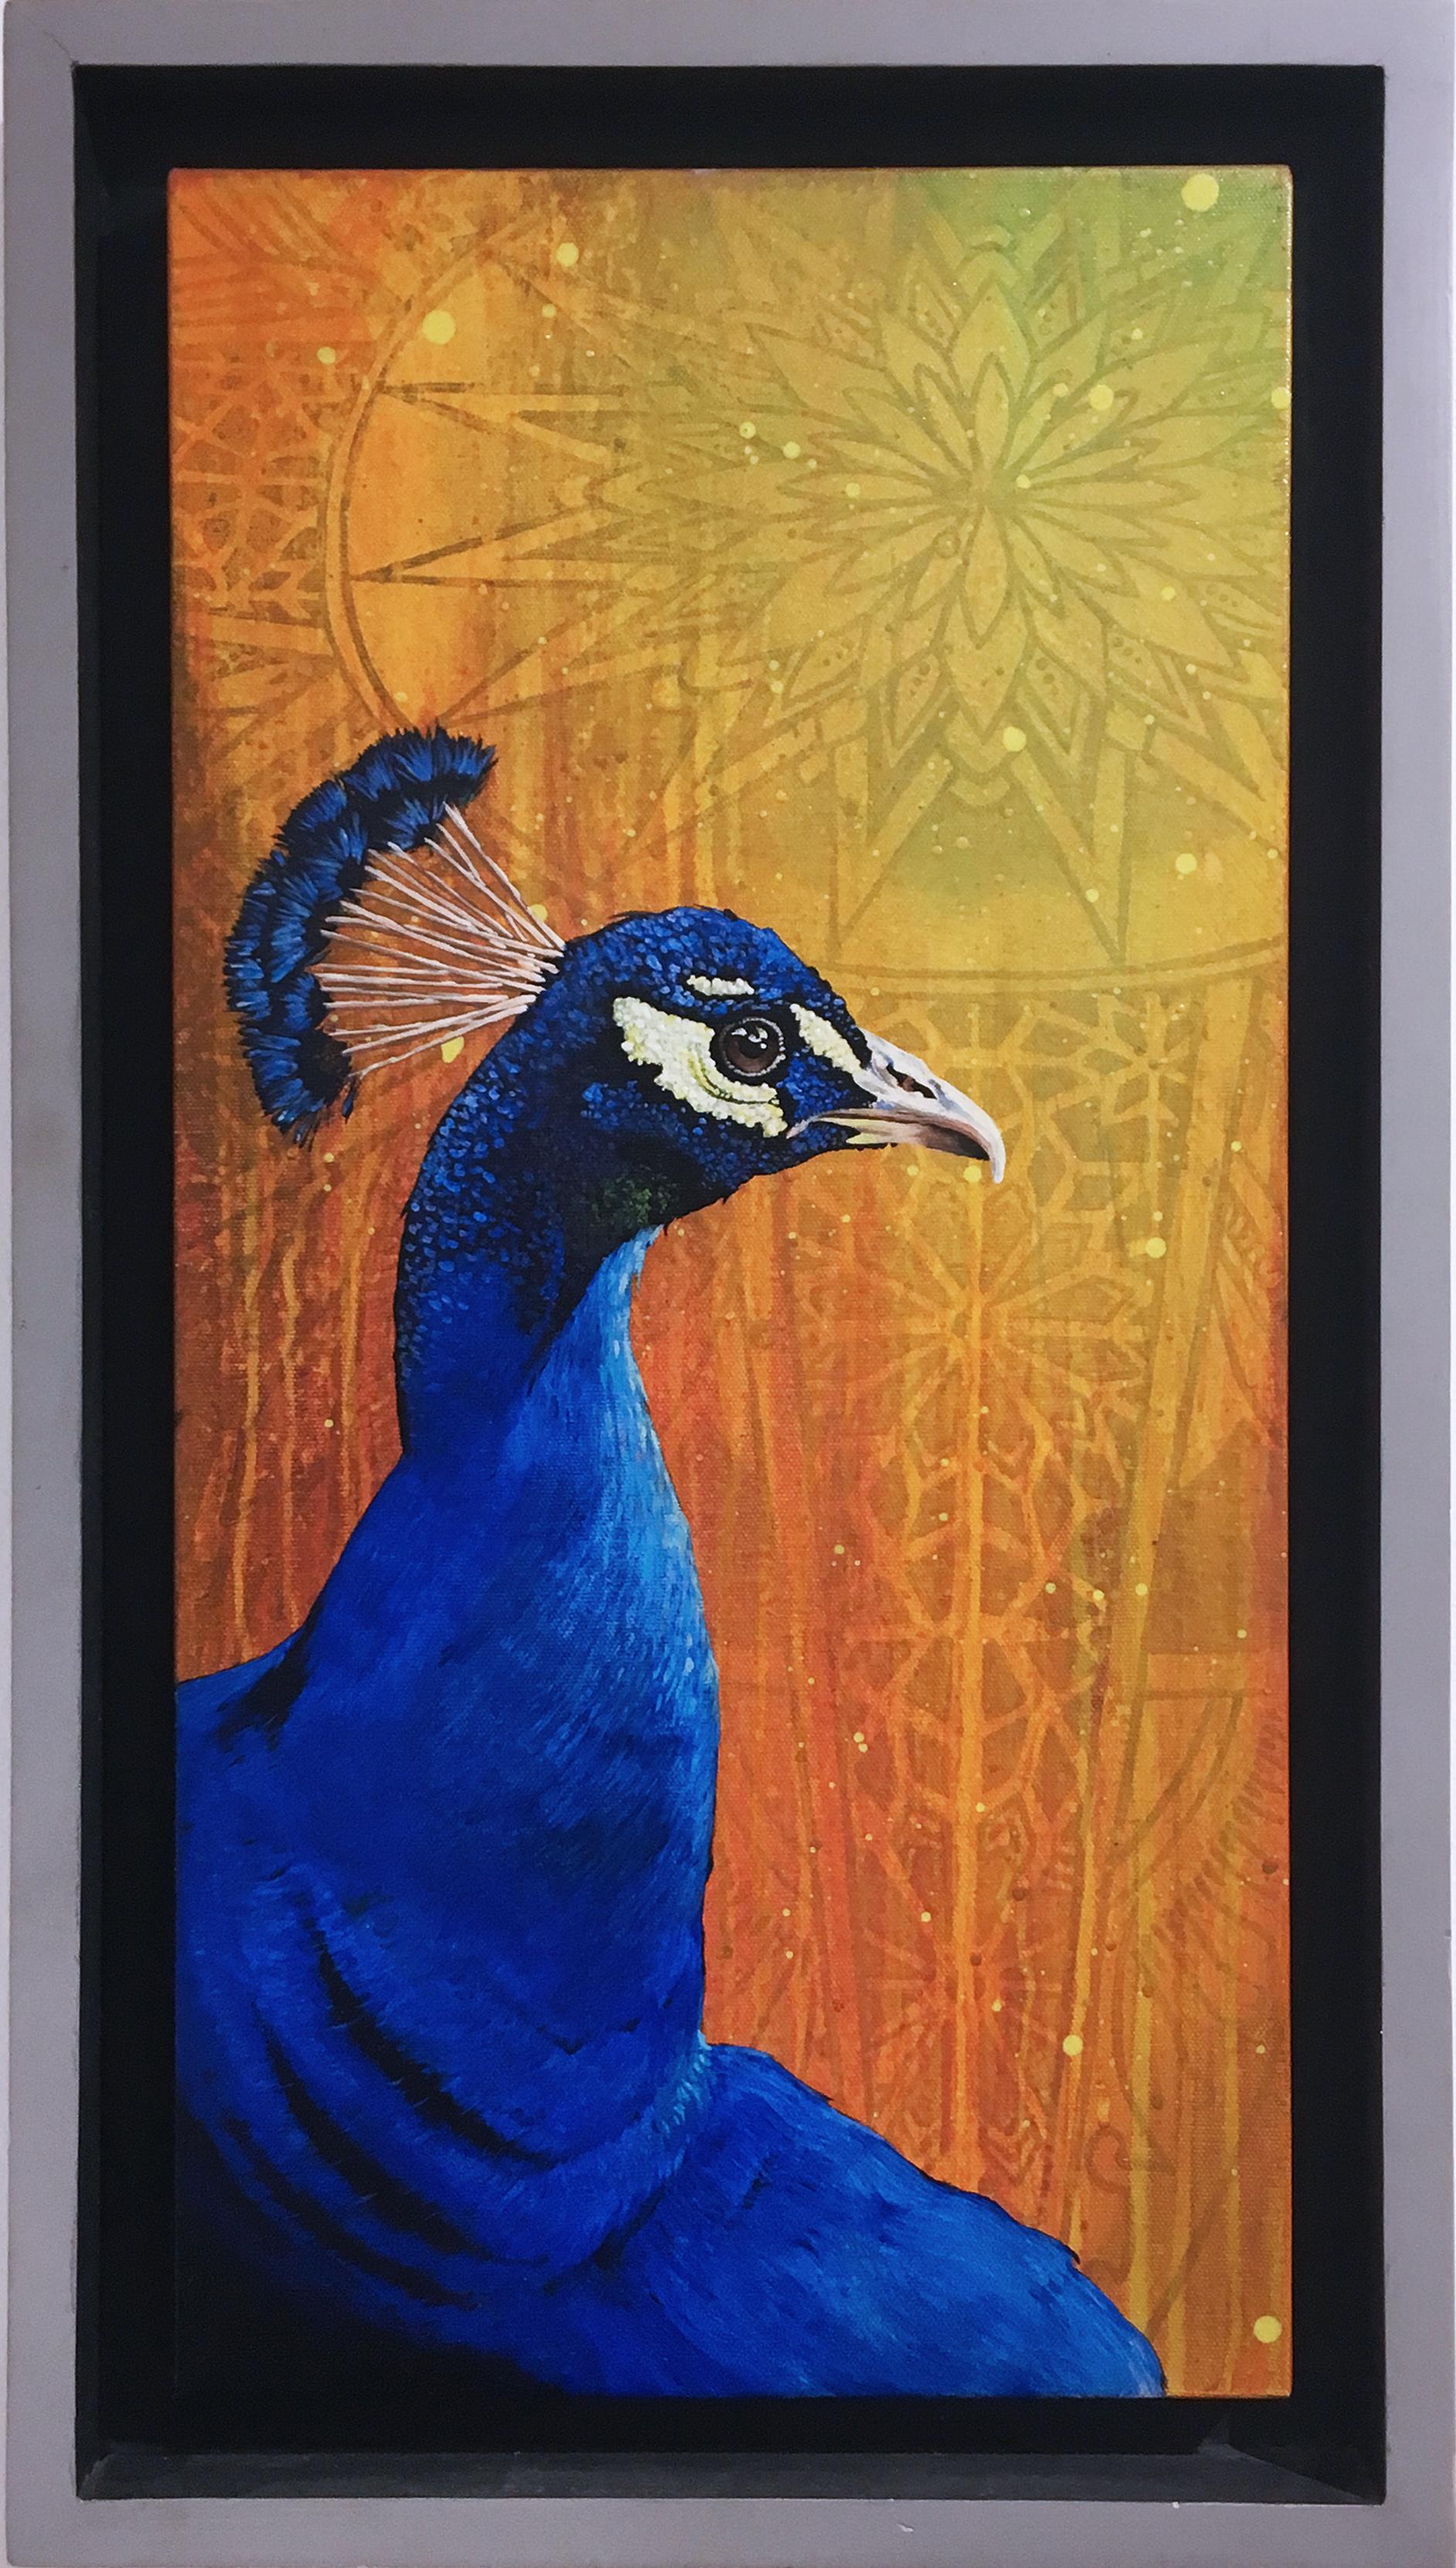 Ed Morris Animal Painting - Peacock, by street art legend TDEE, custom framed, yellow, orange, blue, pattern